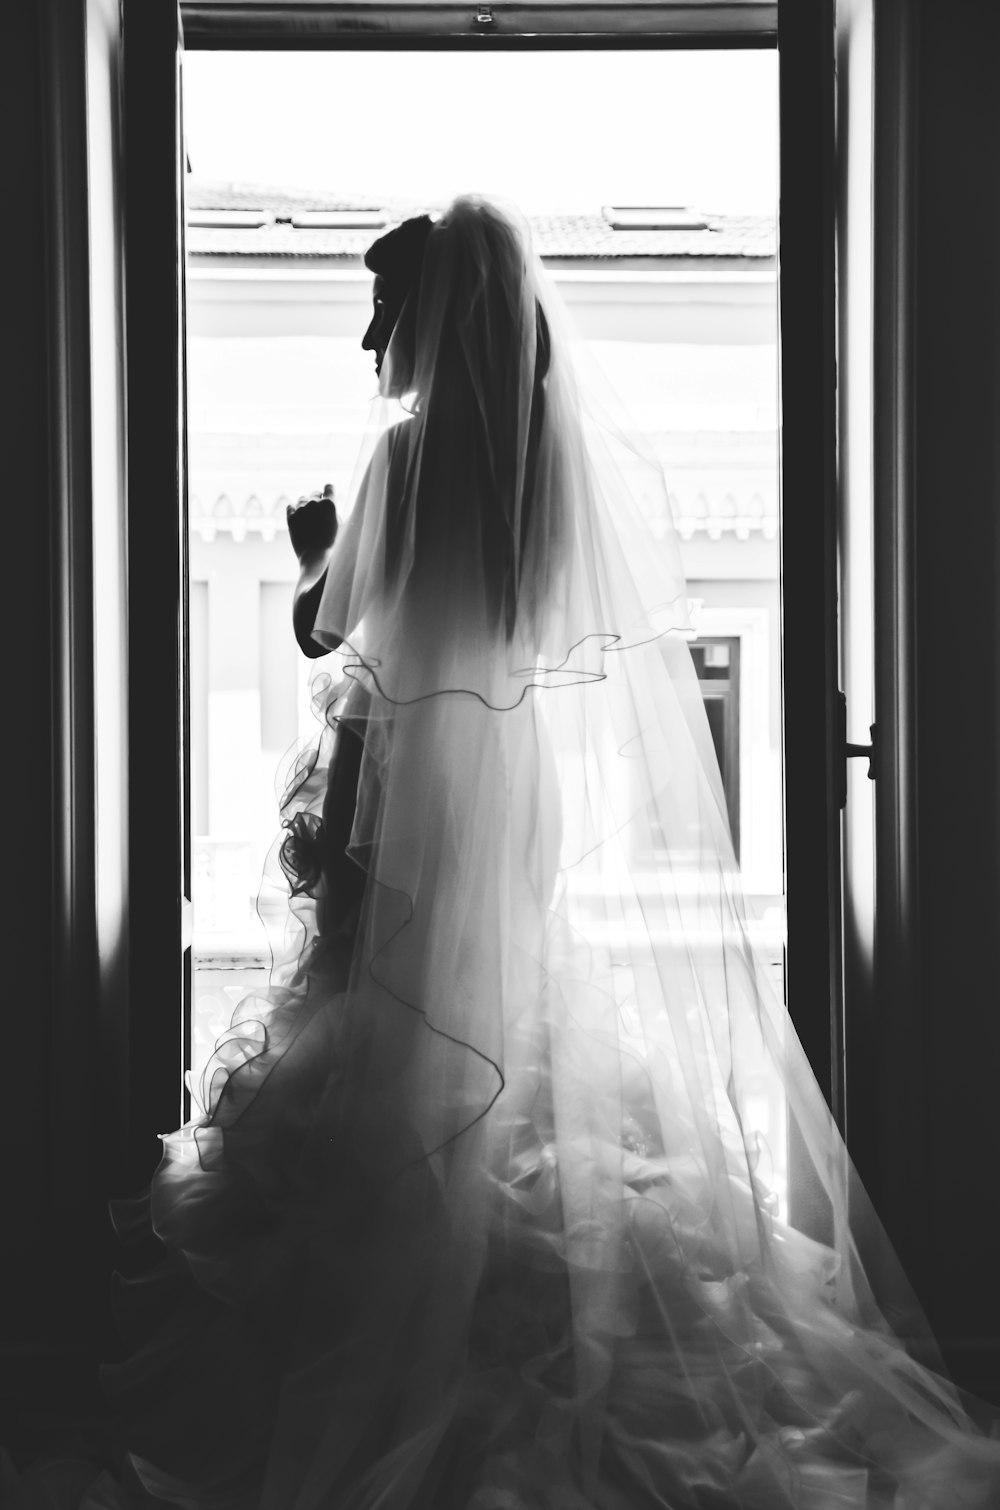 grayscale photography of woman wearing wedding dress